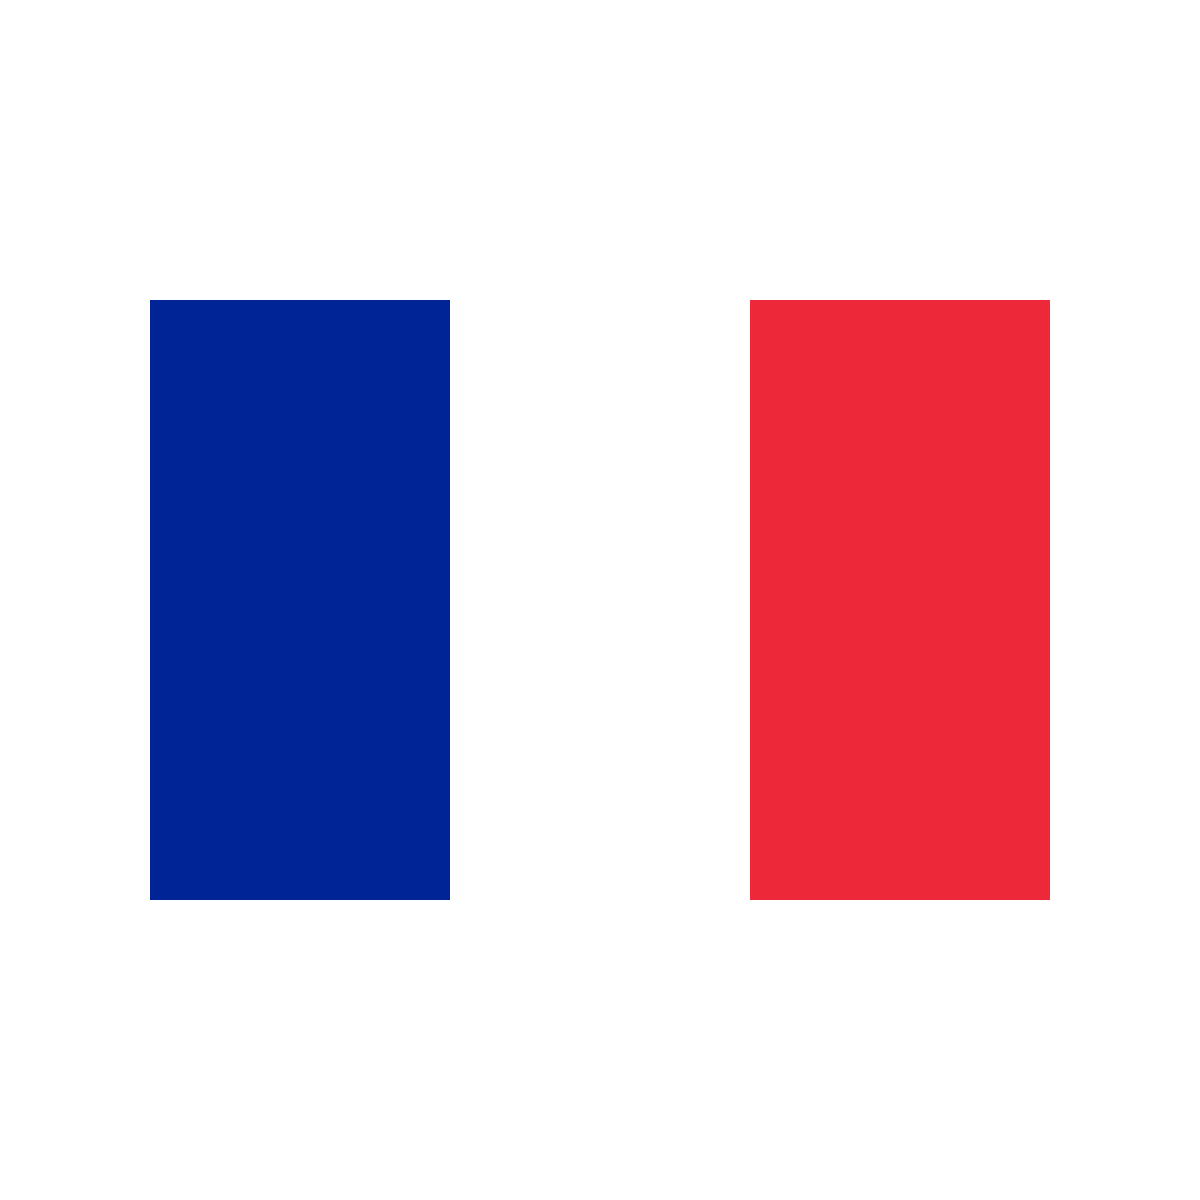 Gastlandflaggen-Frankreich